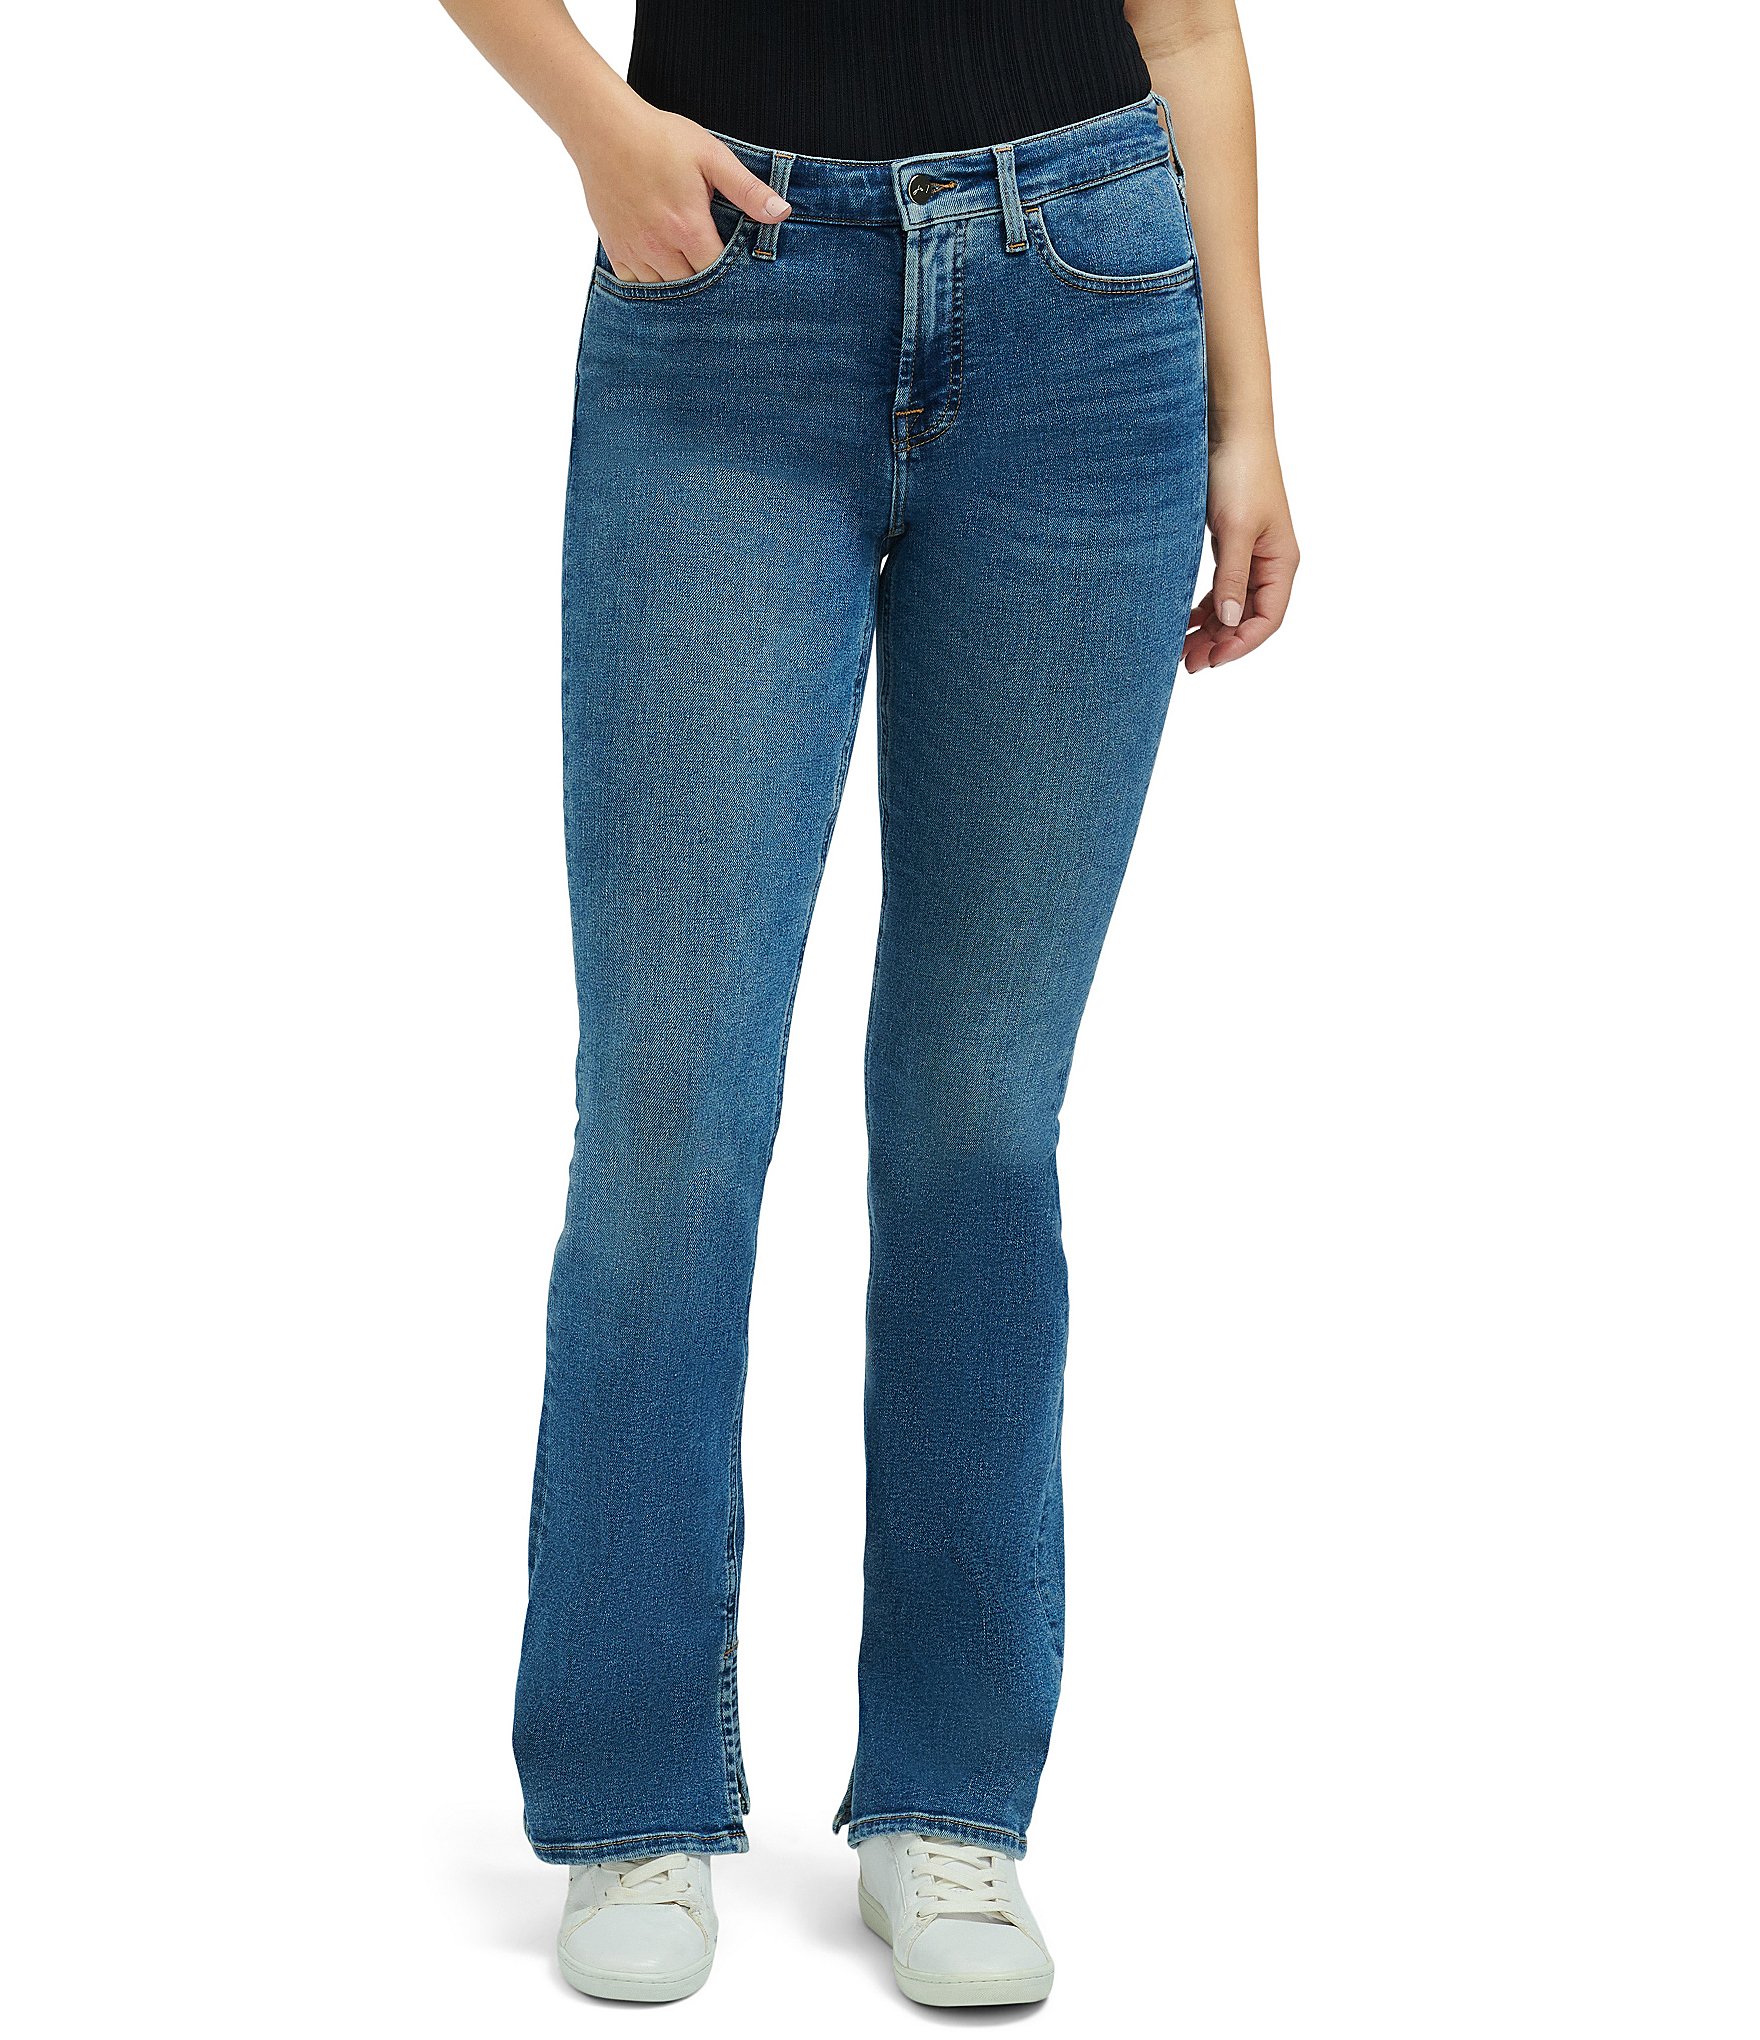 Waisted Calf Jeans Slim Stretch Denim Women Pants Hole Length Mid Jeans  Skinny Womens High Fashion Jeans